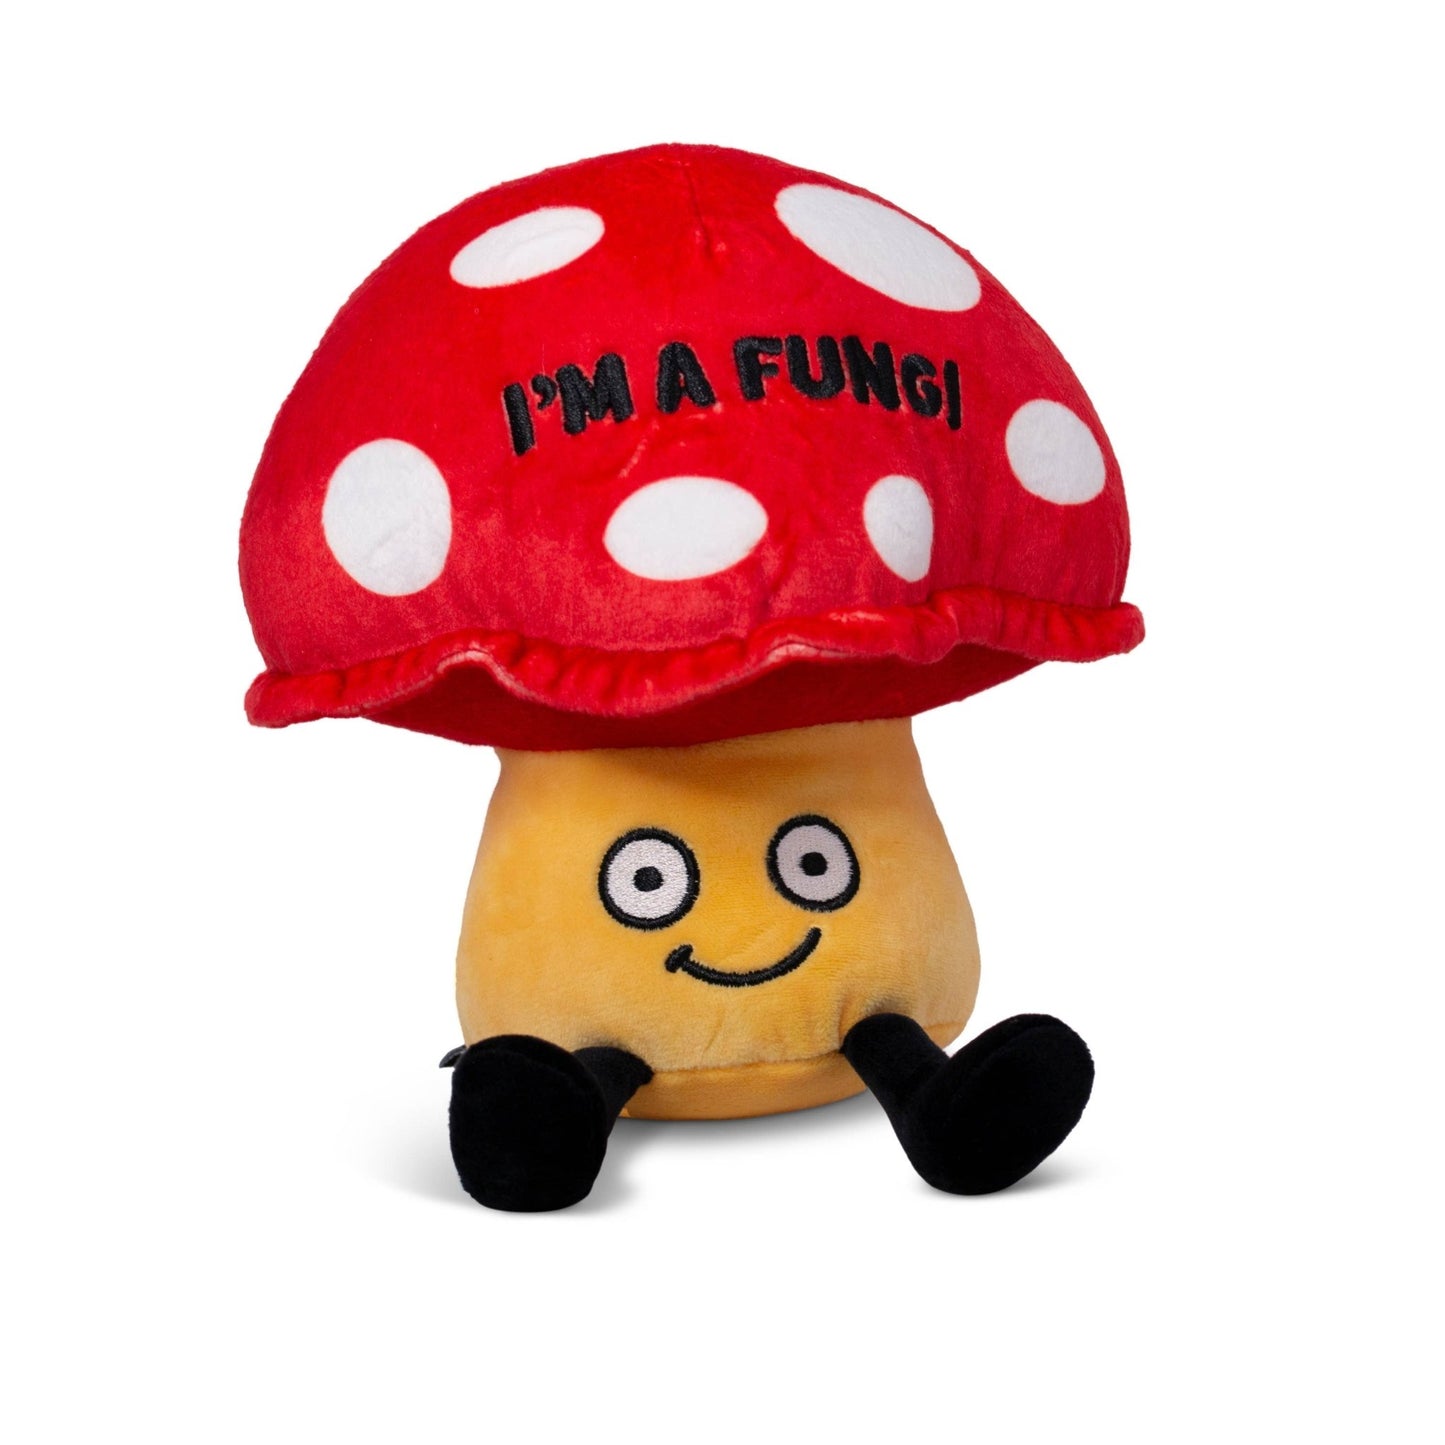 Mushroom Fun-Gi Plushie! Cute Gift - Saints Place Designs